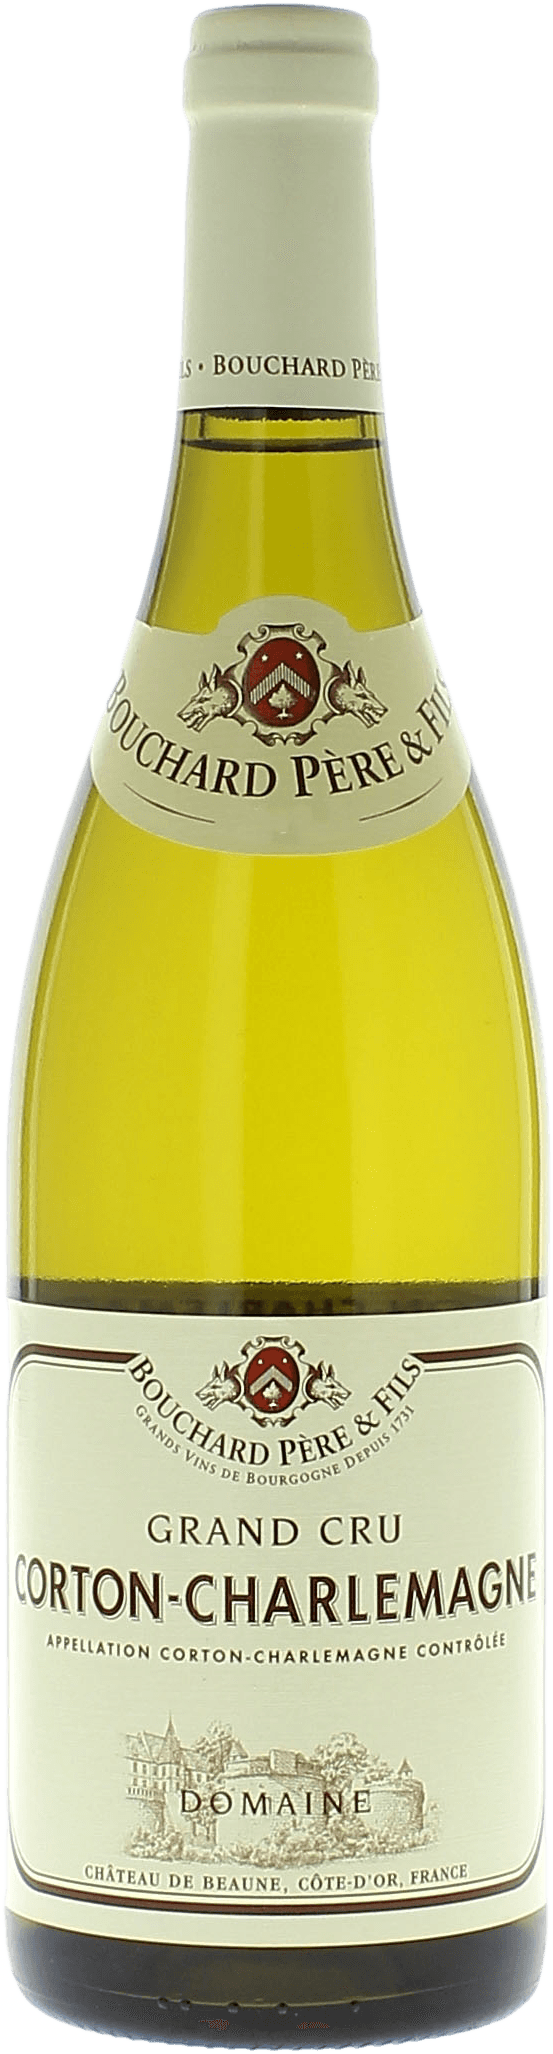 Corton charlemagne grand cru 2020  BOUCHARD Pre et fils, Bourgogne blanc